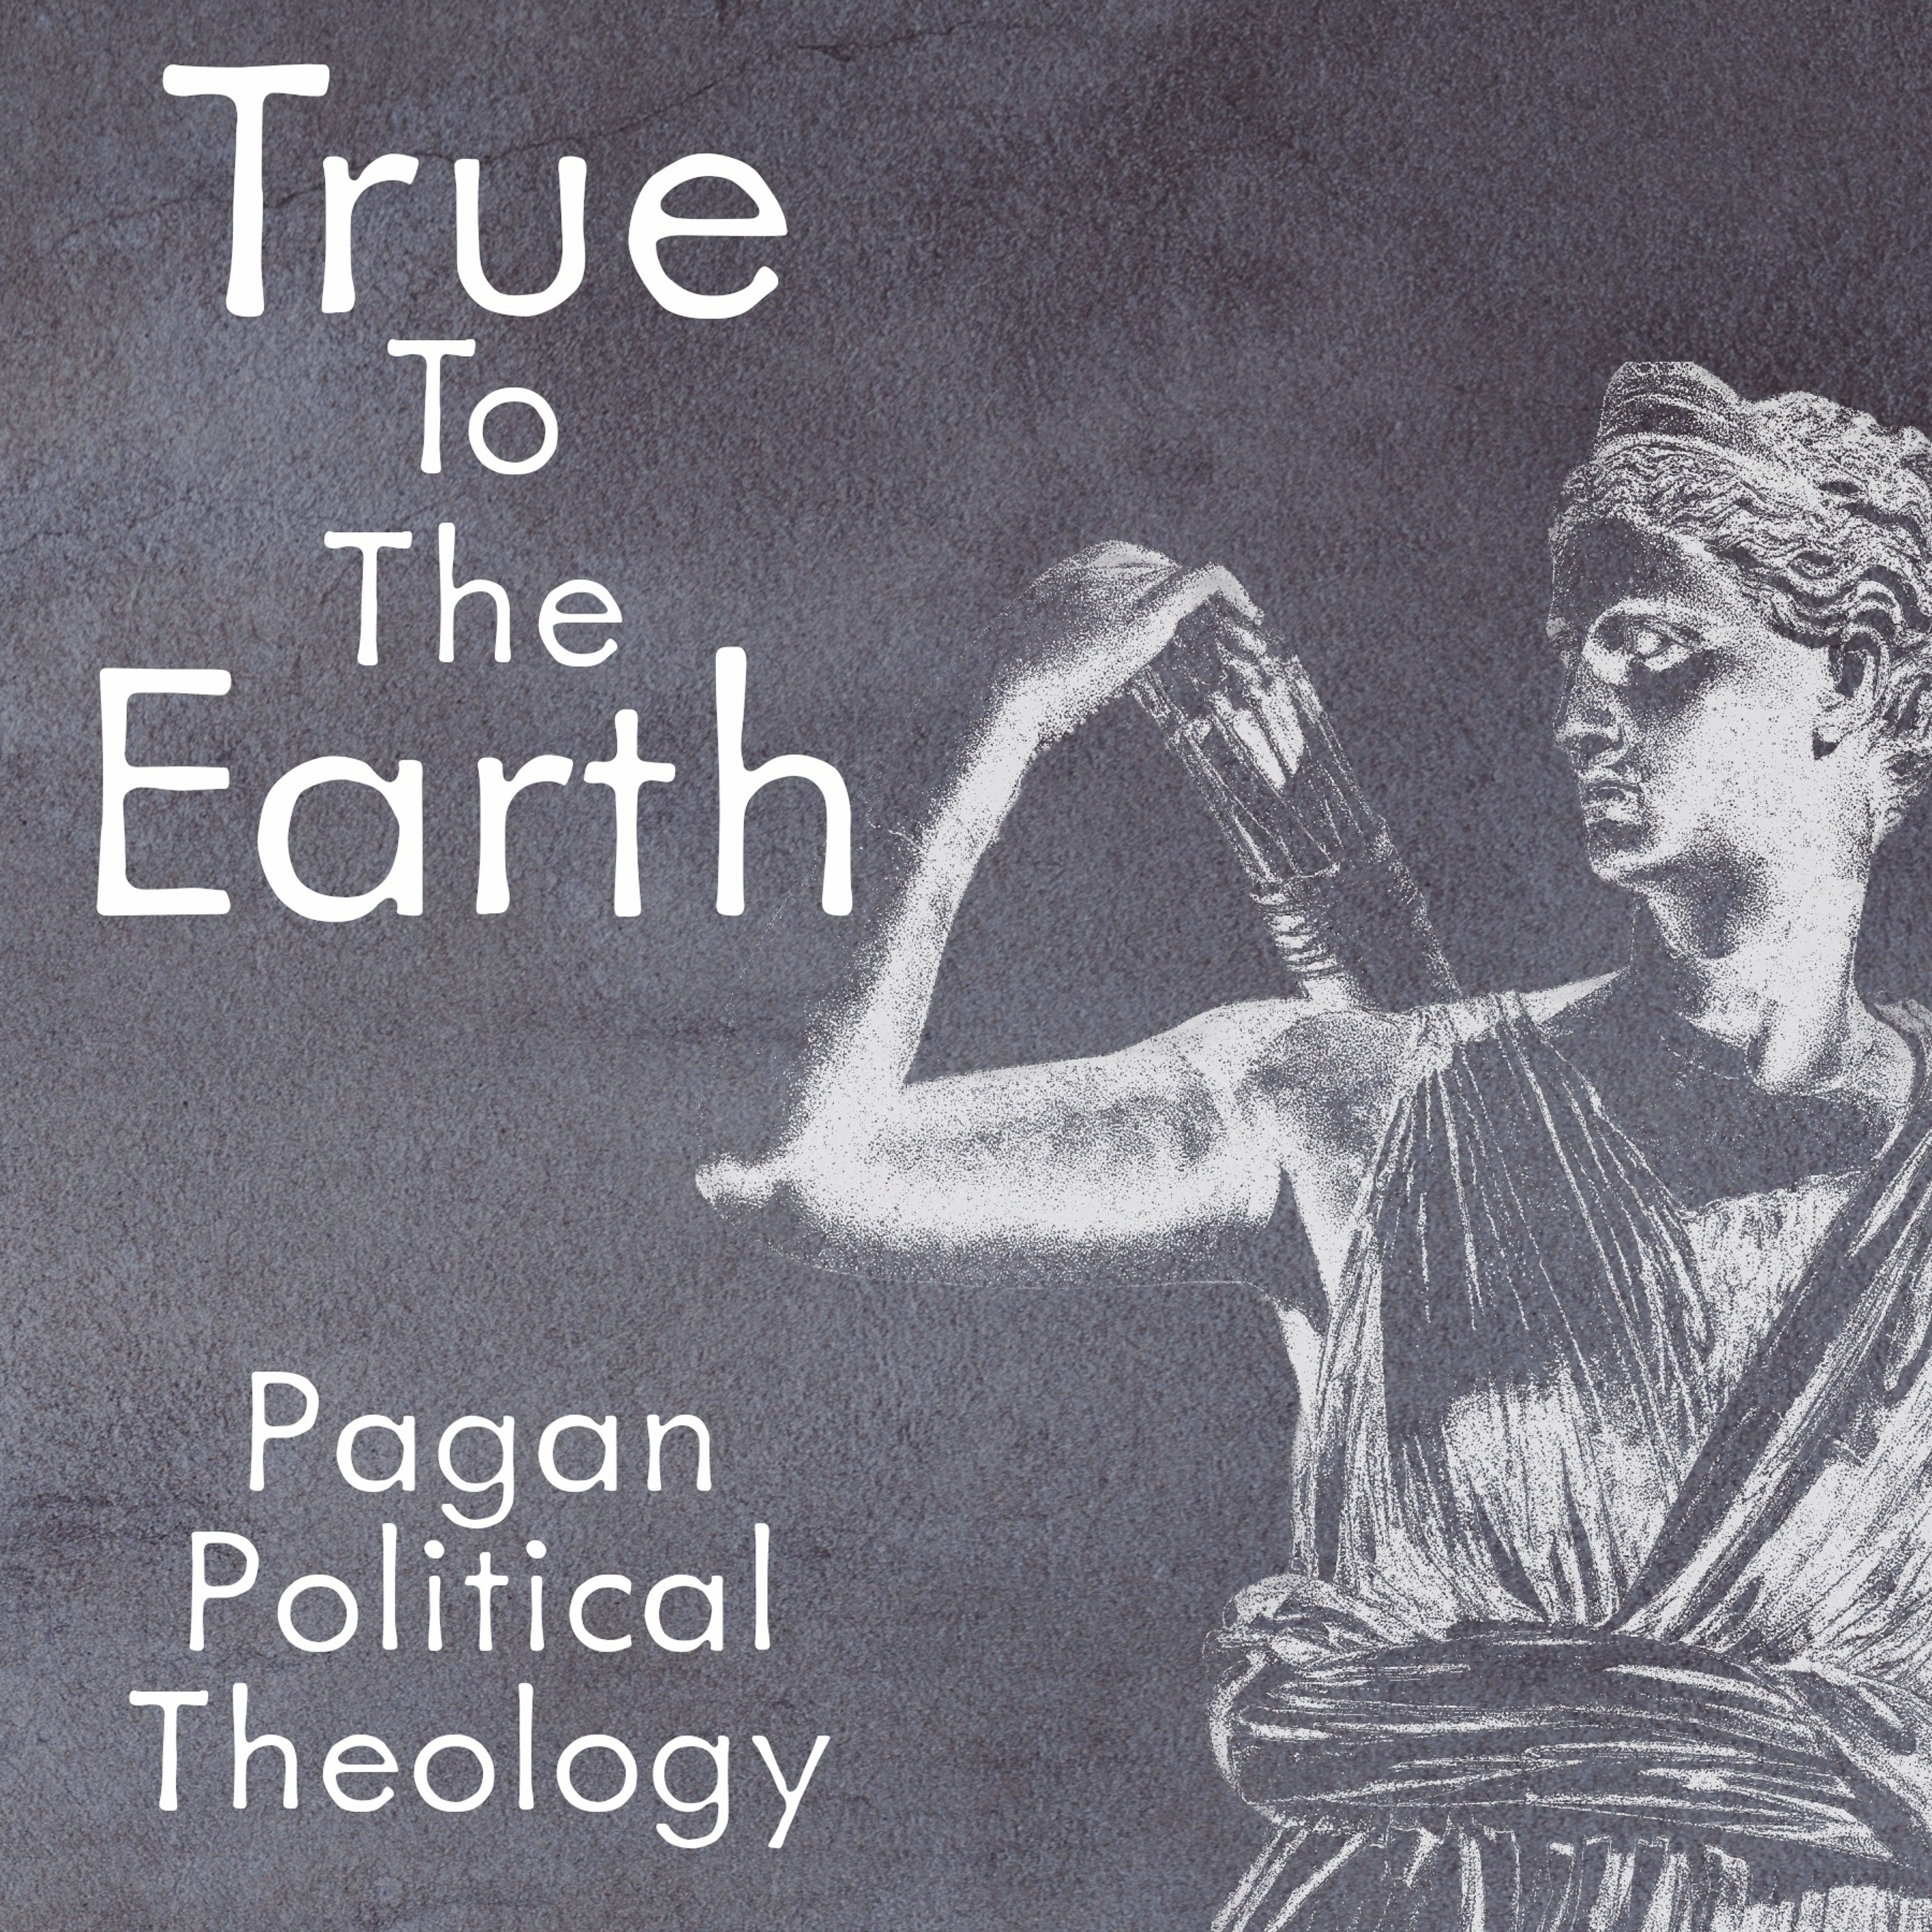 RU276: DR KADMUS HERSCHEL ON TRUE TO THE EARTH, PAGAN POLITICAL THEOLOGY